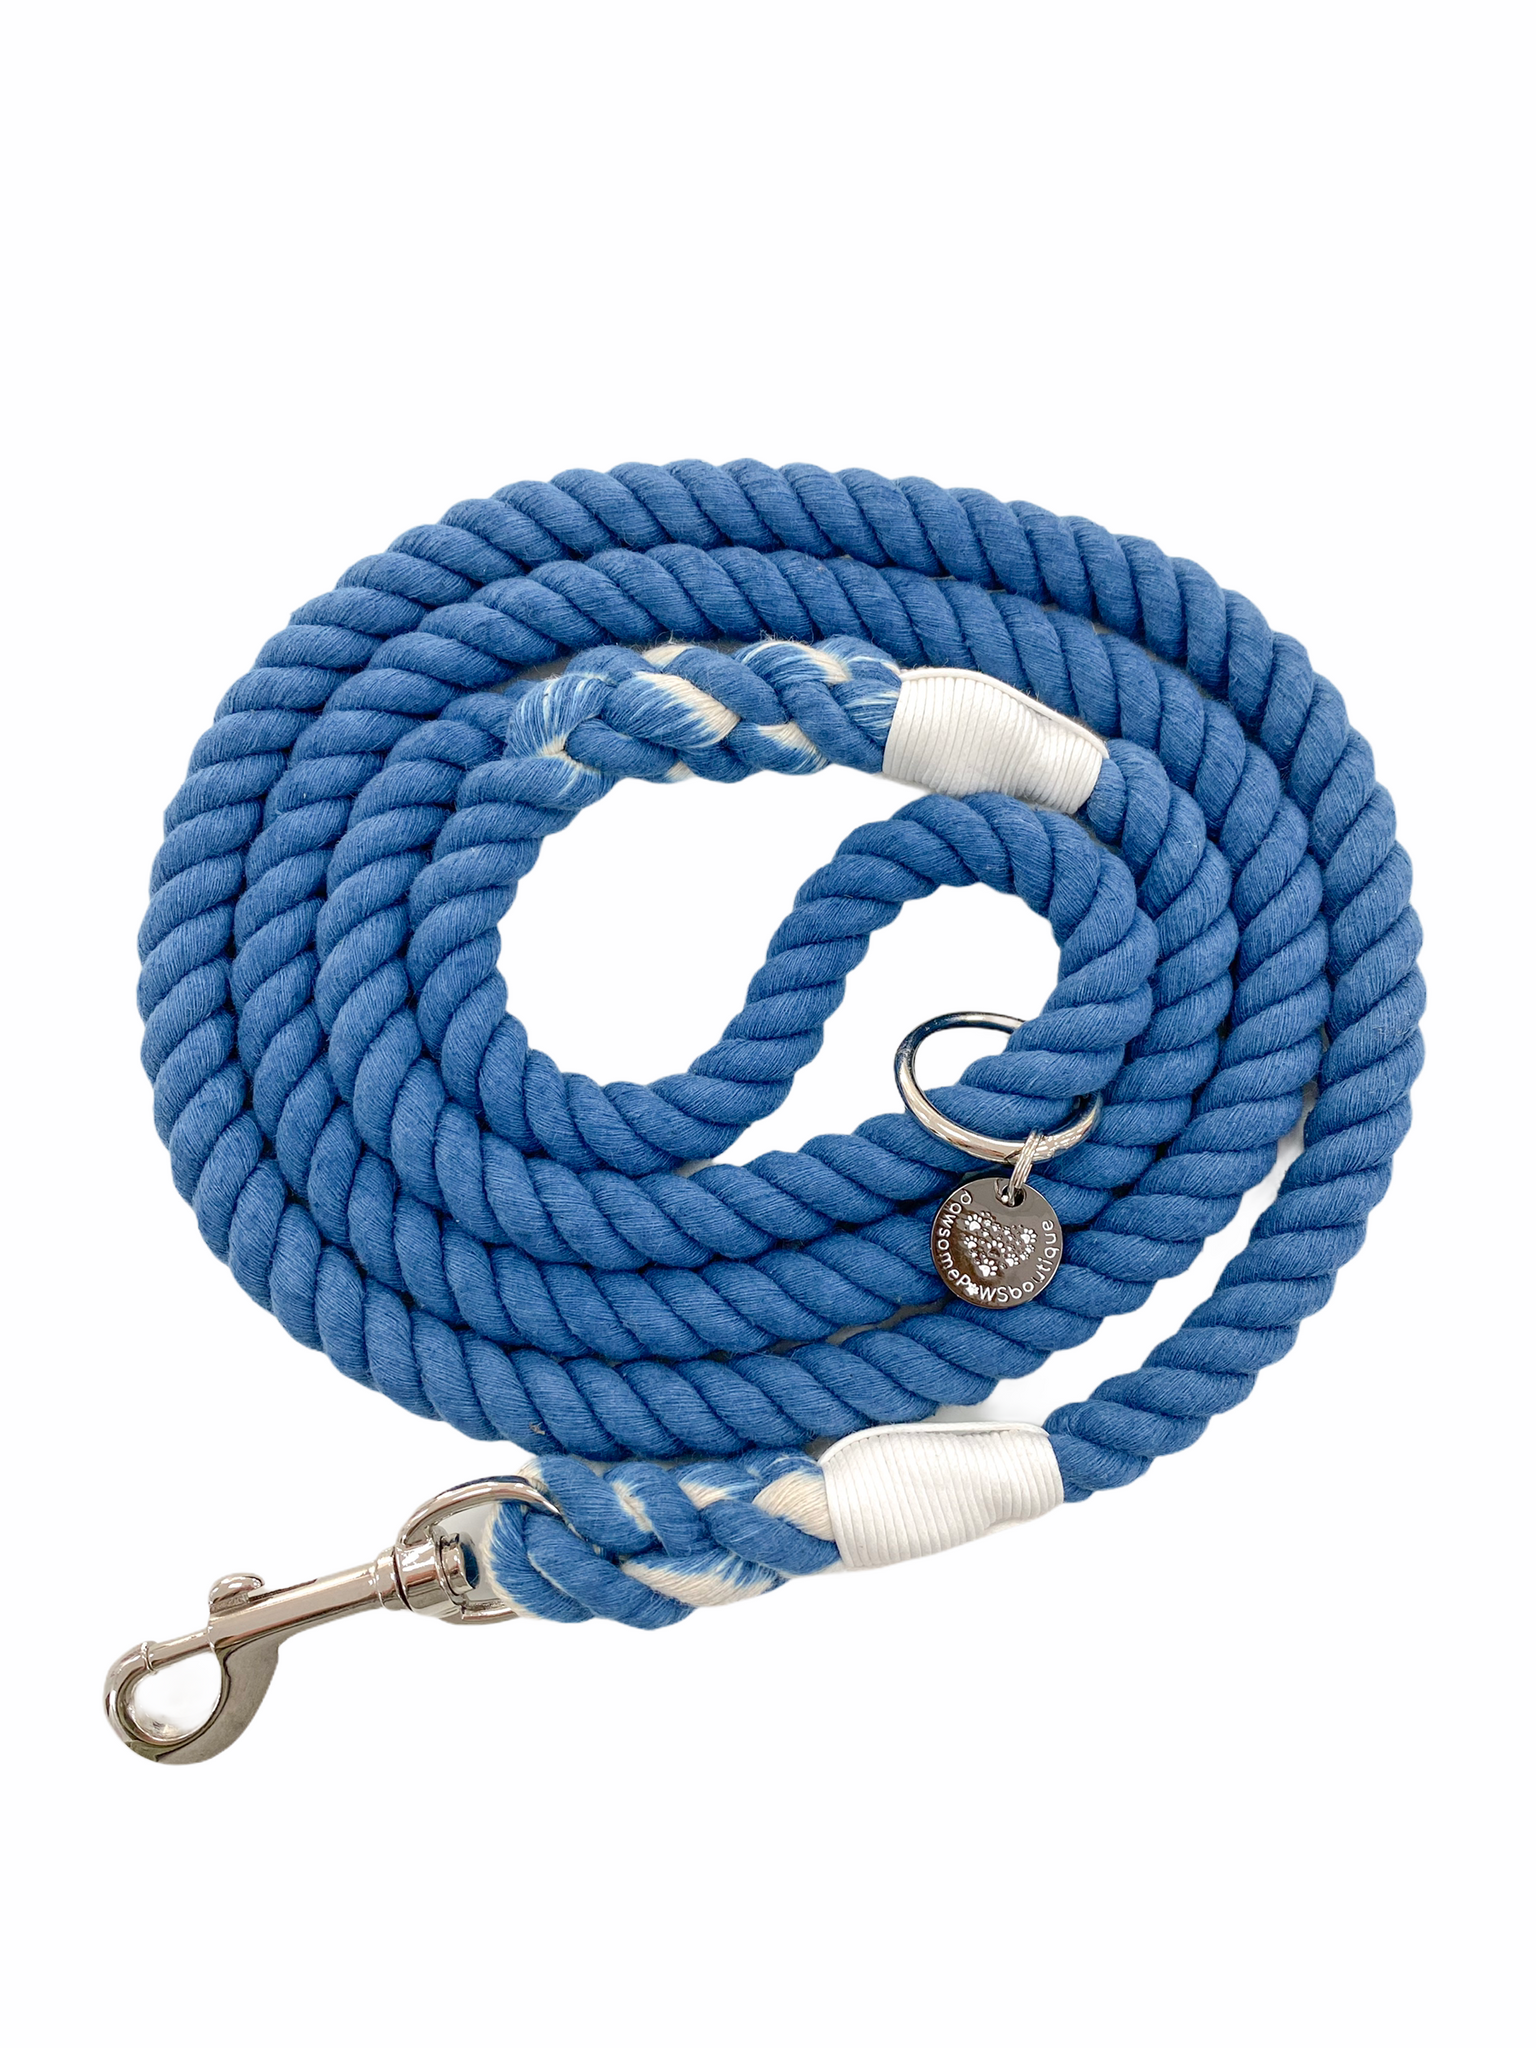 Rope Lead - Royal Blue